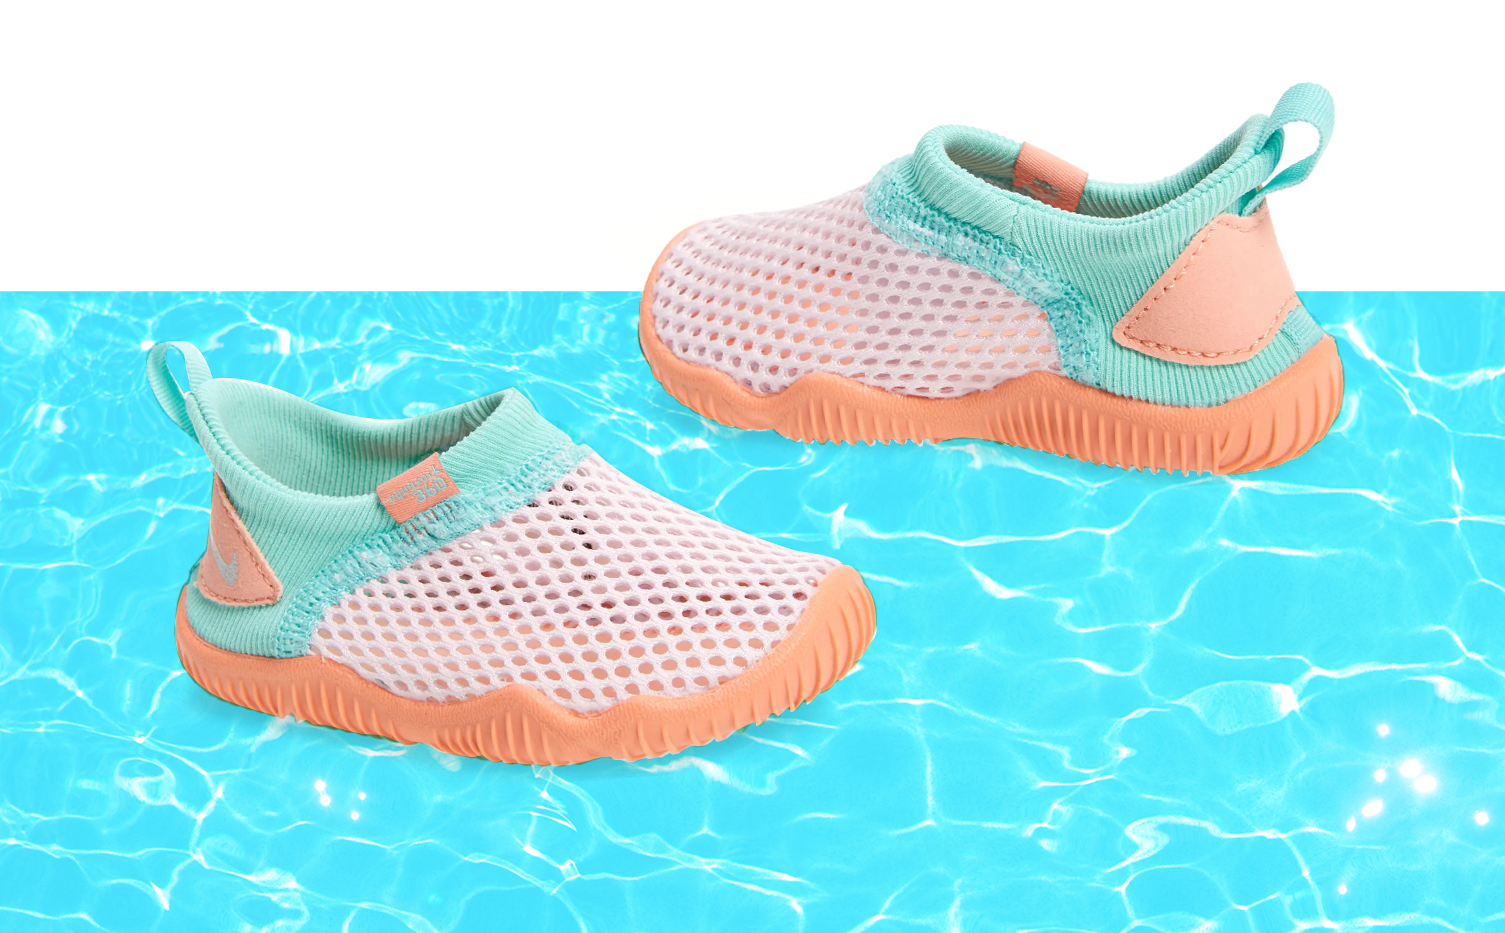 New Boys/Girls Youth Water Shoes Aqua Socks for Beach Sizes 11,12,13,1,2,3,4 